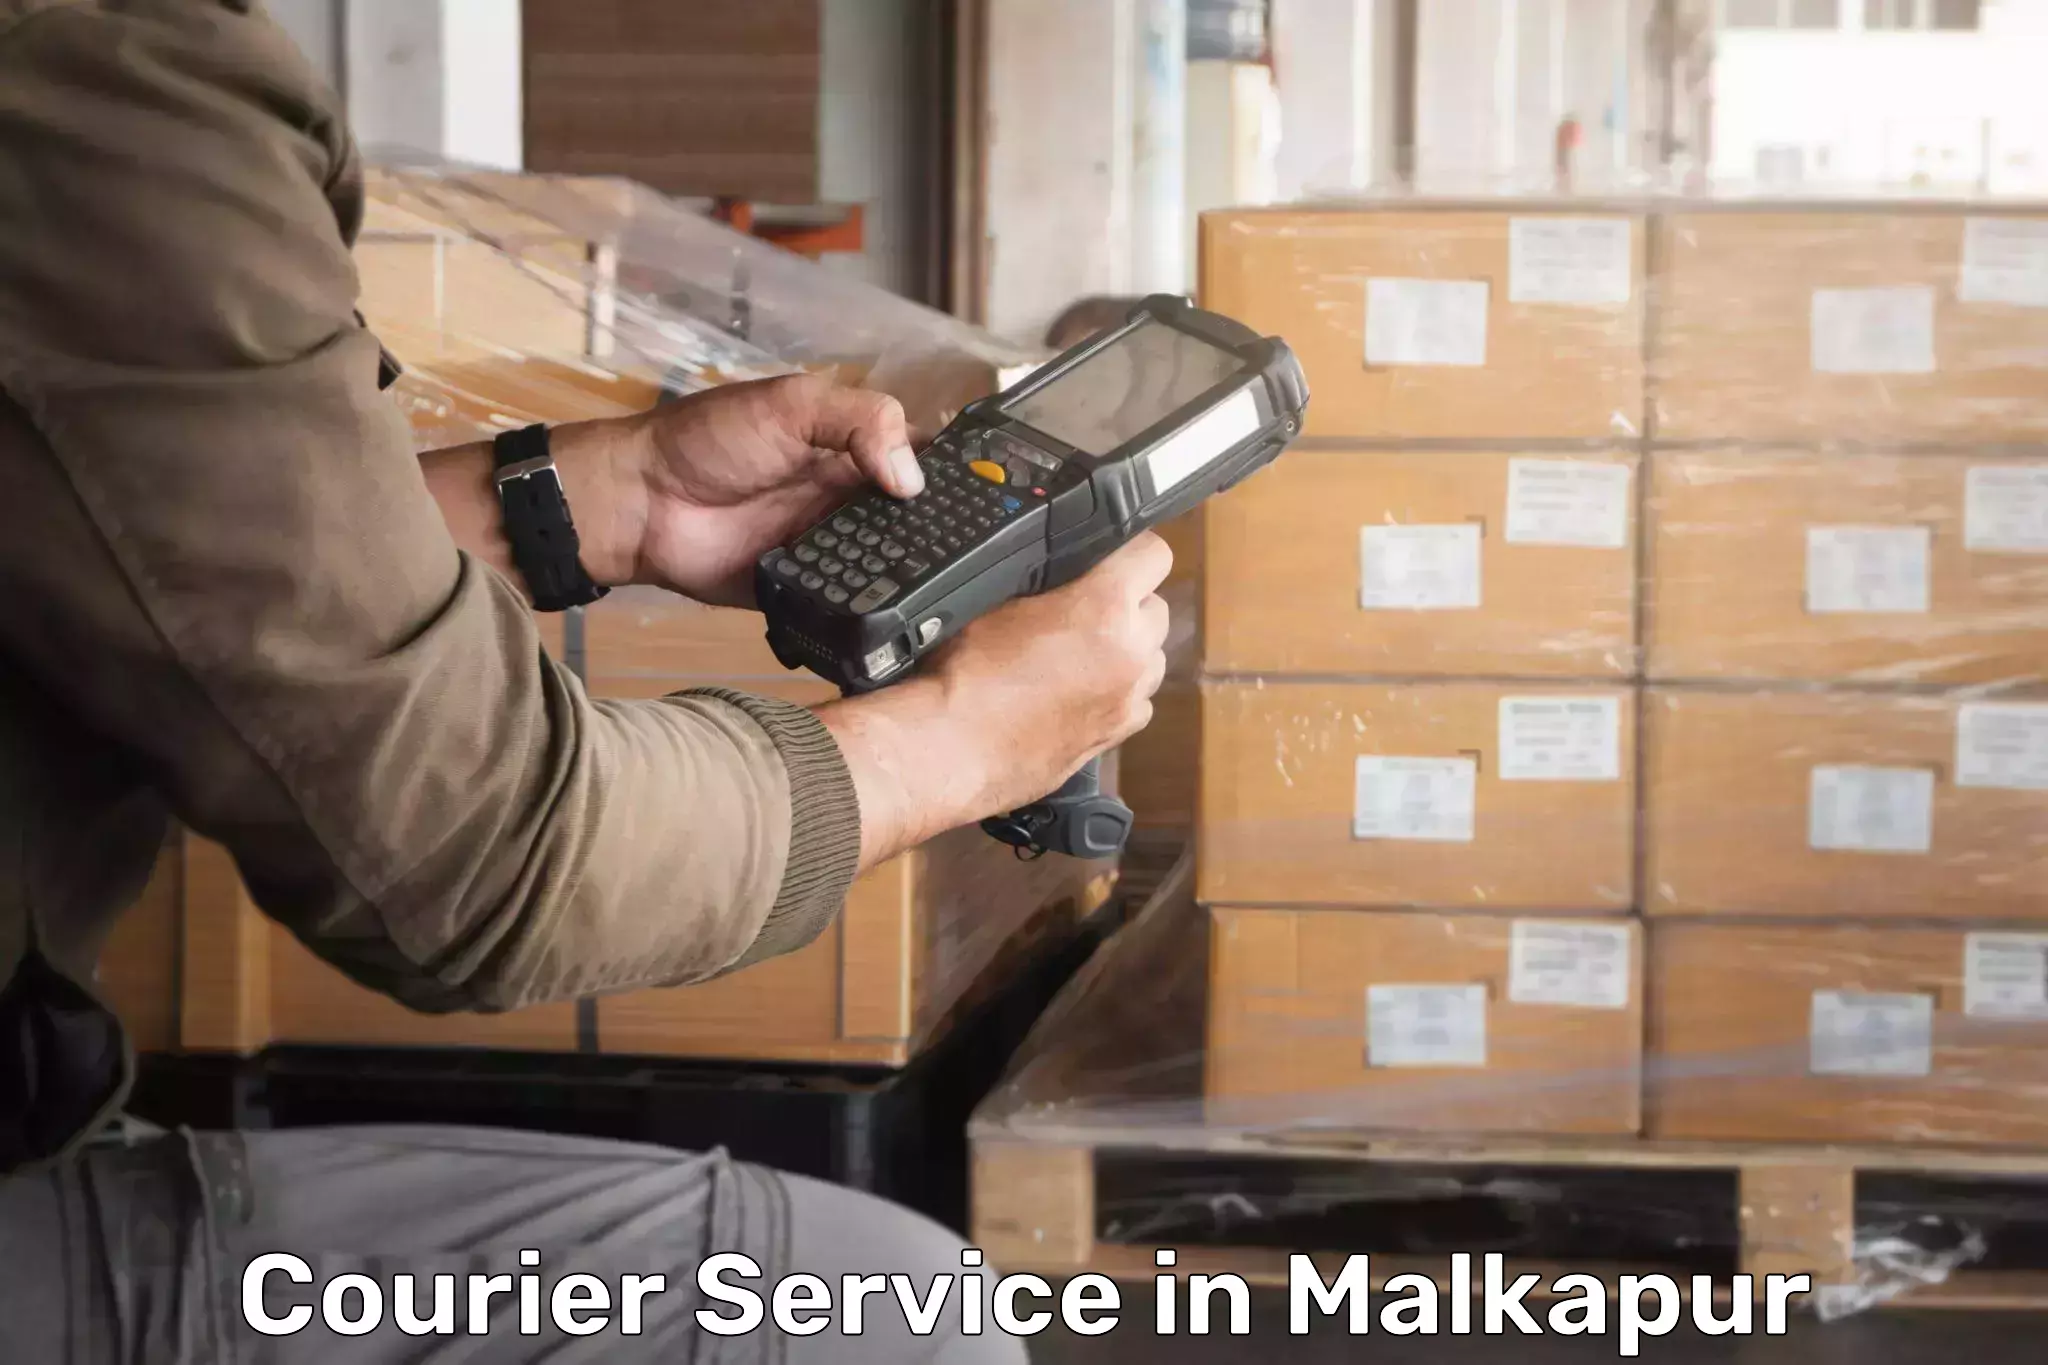 Multi-service courier options in Malkapur